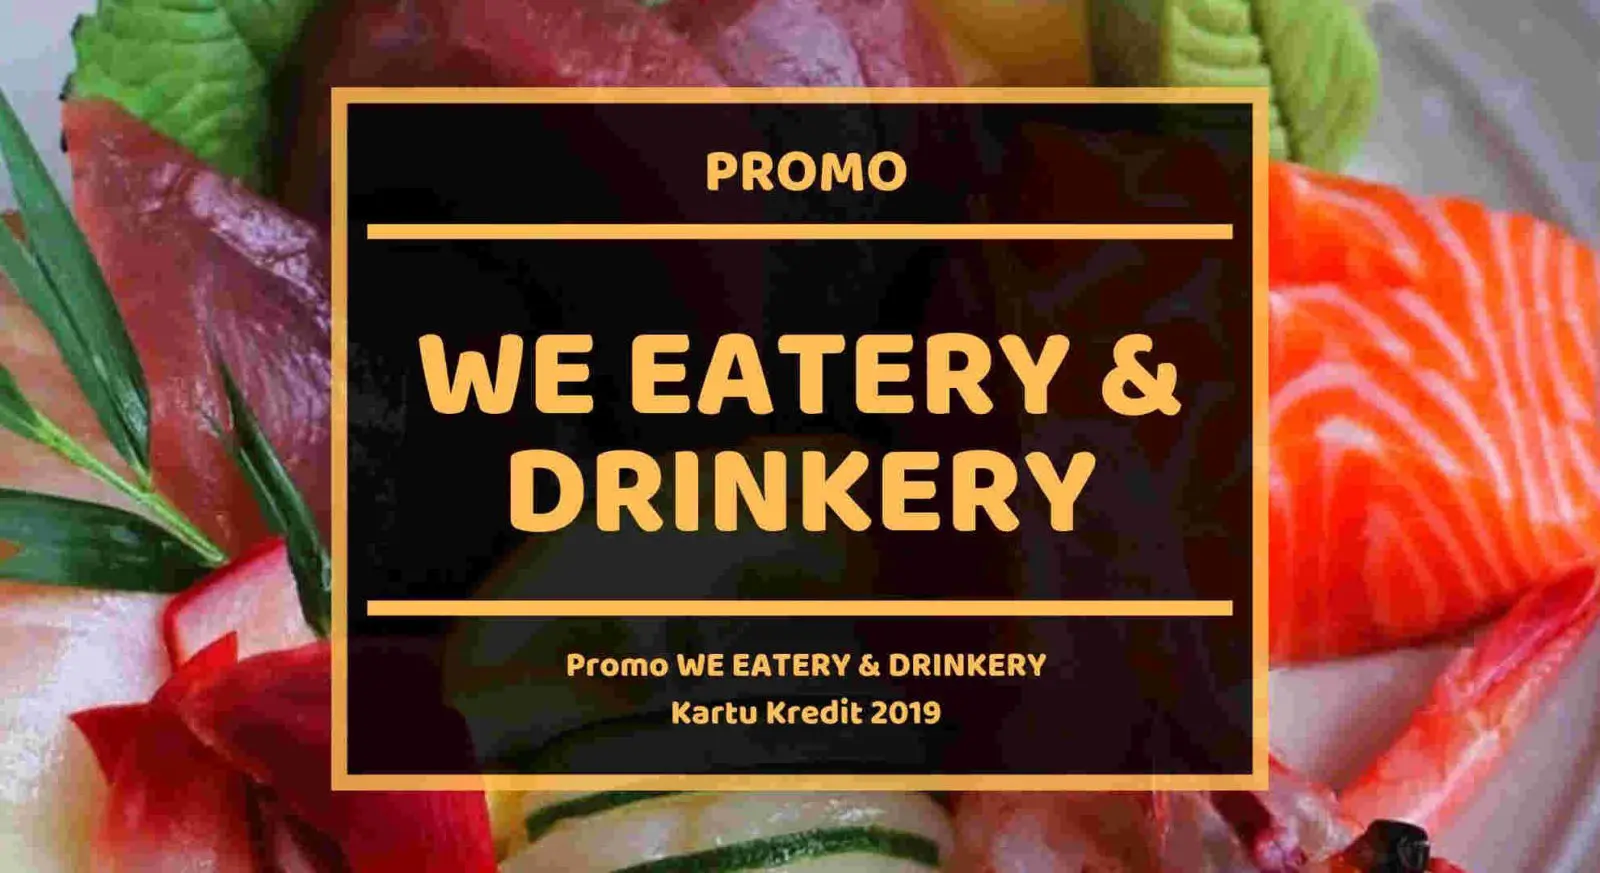 Promo We Eatery & Drinkery